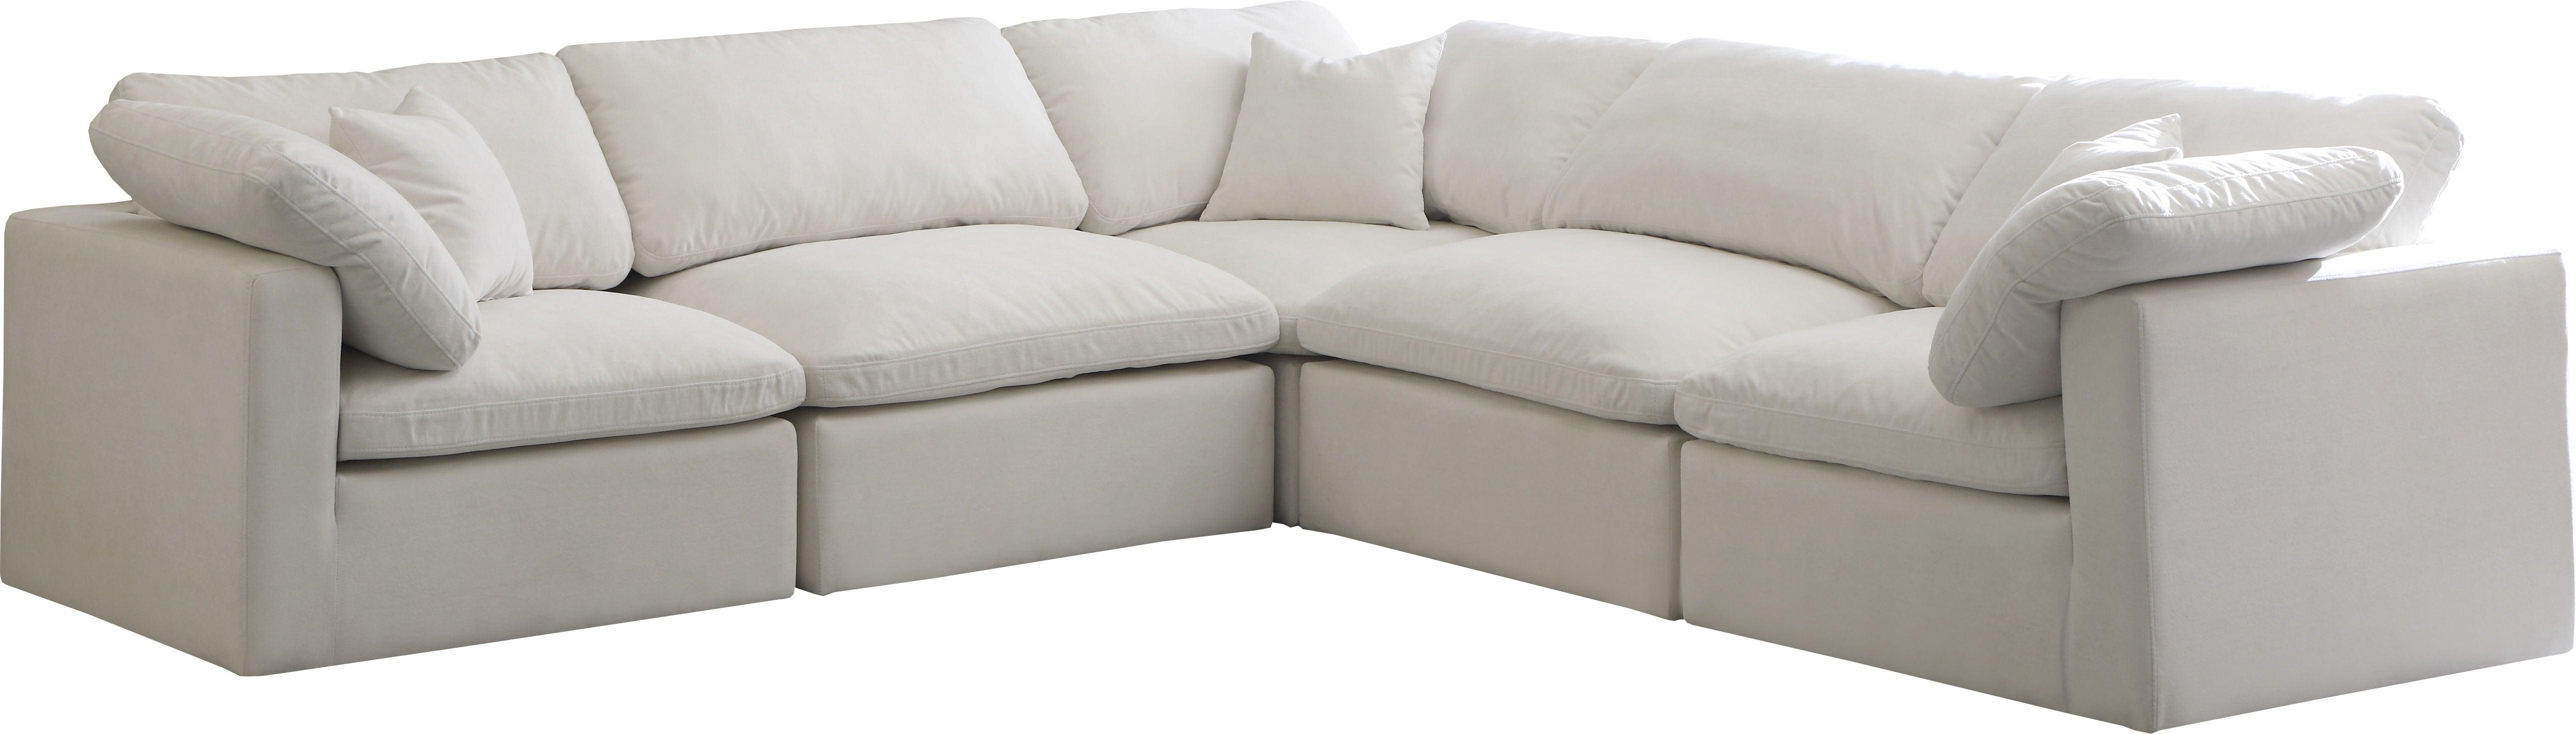 Meridian Furniture - Plush - Velvet Standart Comfort 5 Piece Modular Sectional - Cream - 5th Avenue Furniture